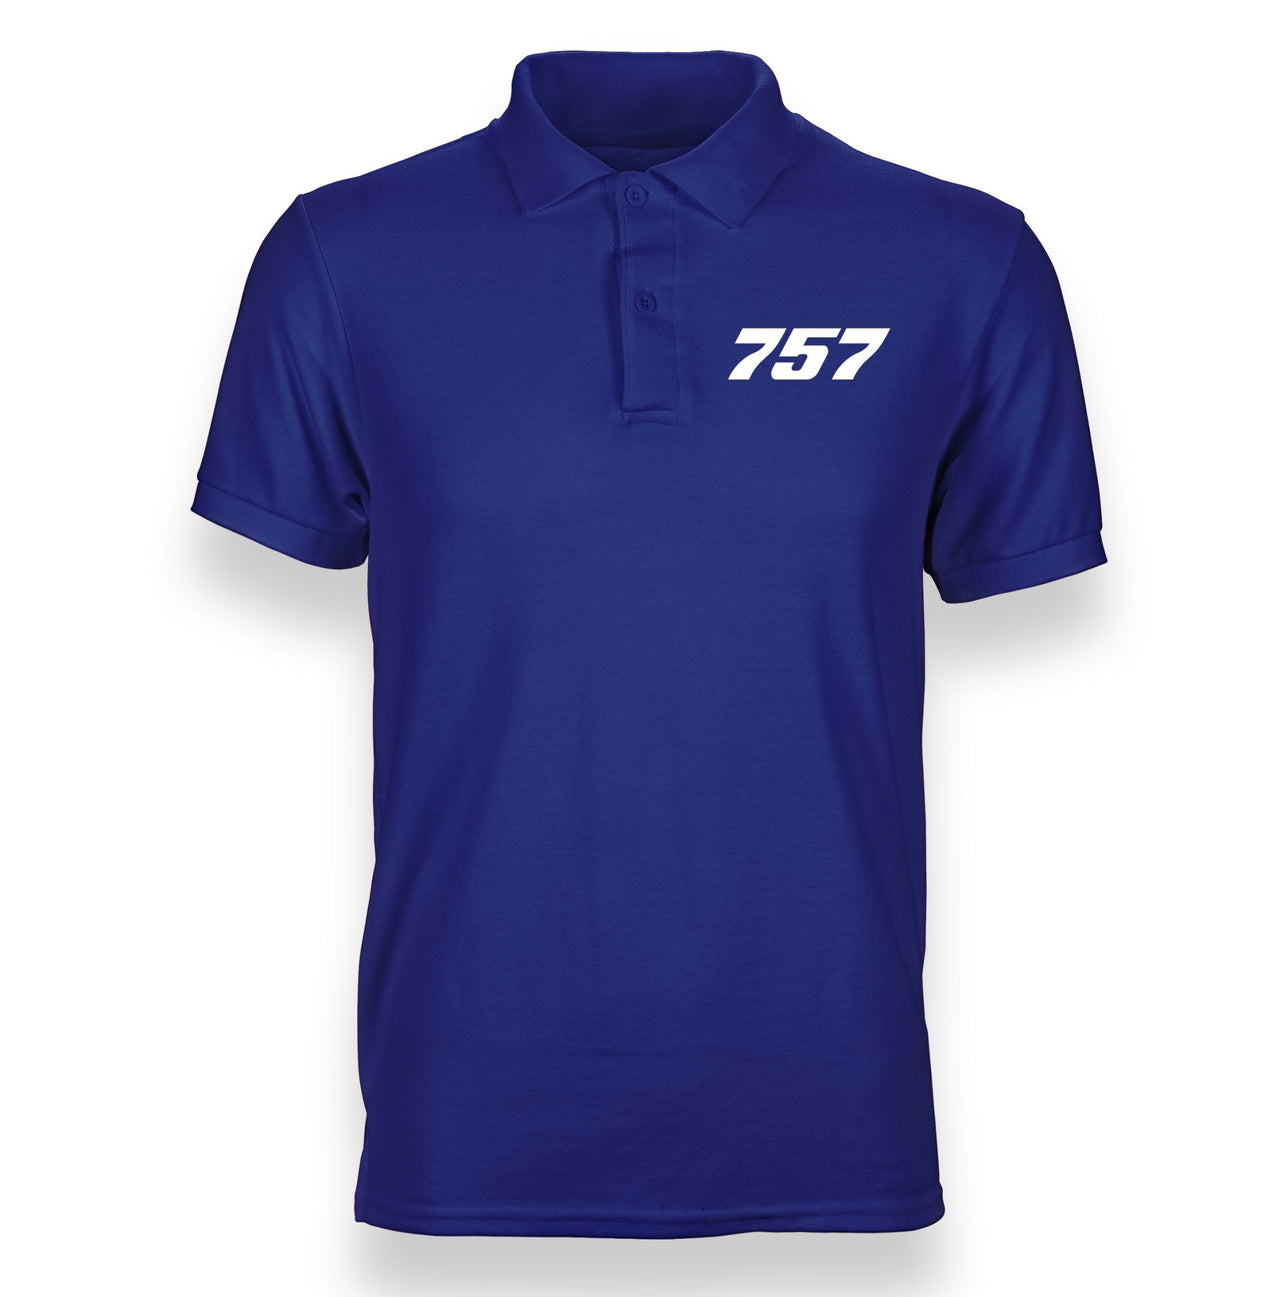 757 Flat Text Designed "WOMEN" Polo T-Shirts